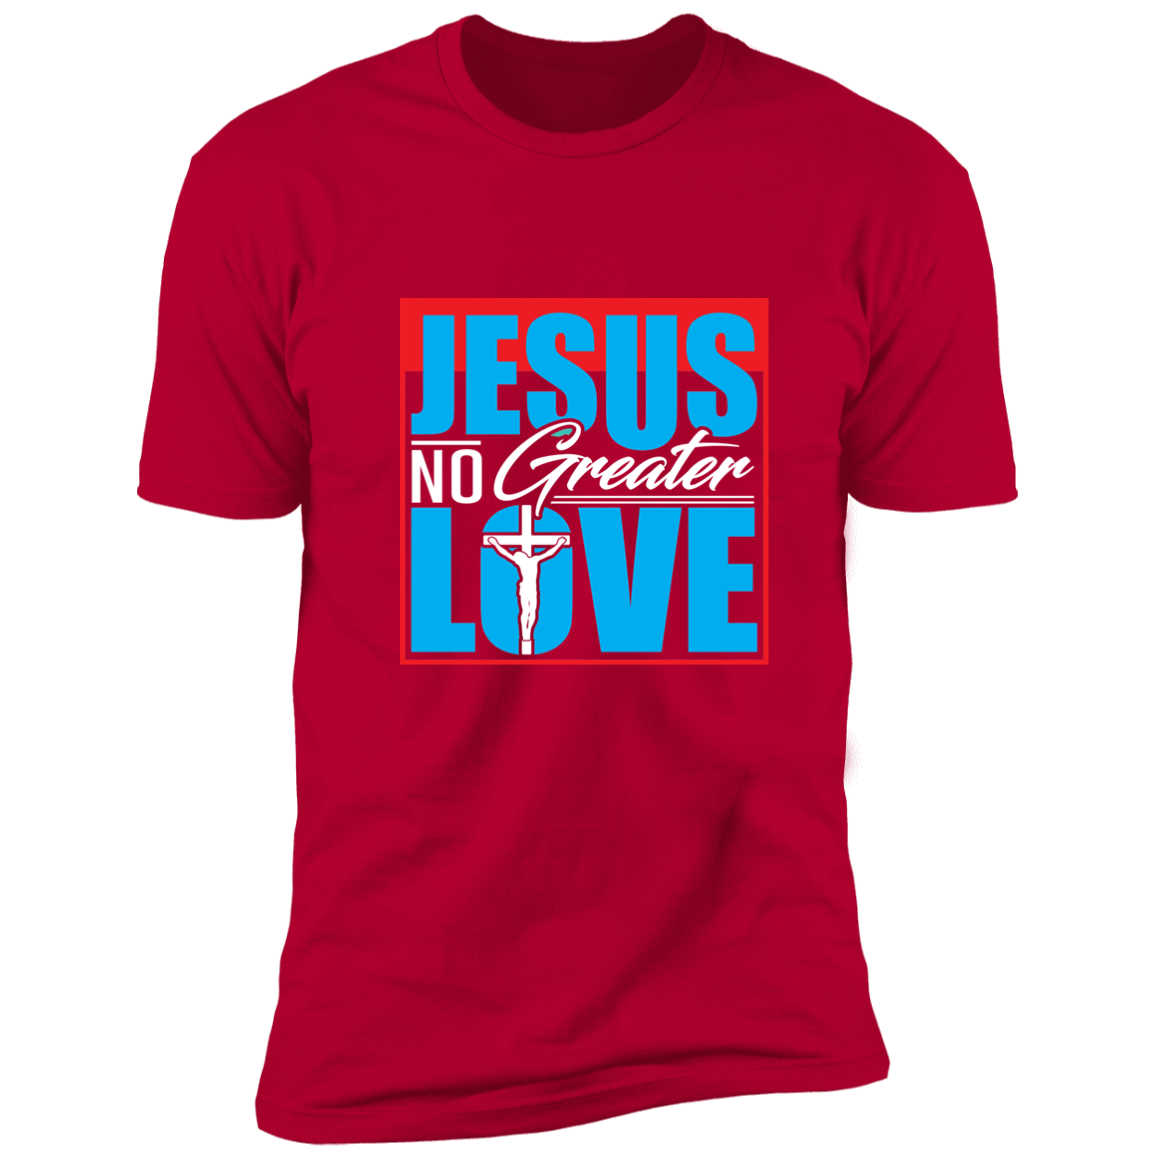 JESUS NO GREATER LOVE Short Sleeve Tee